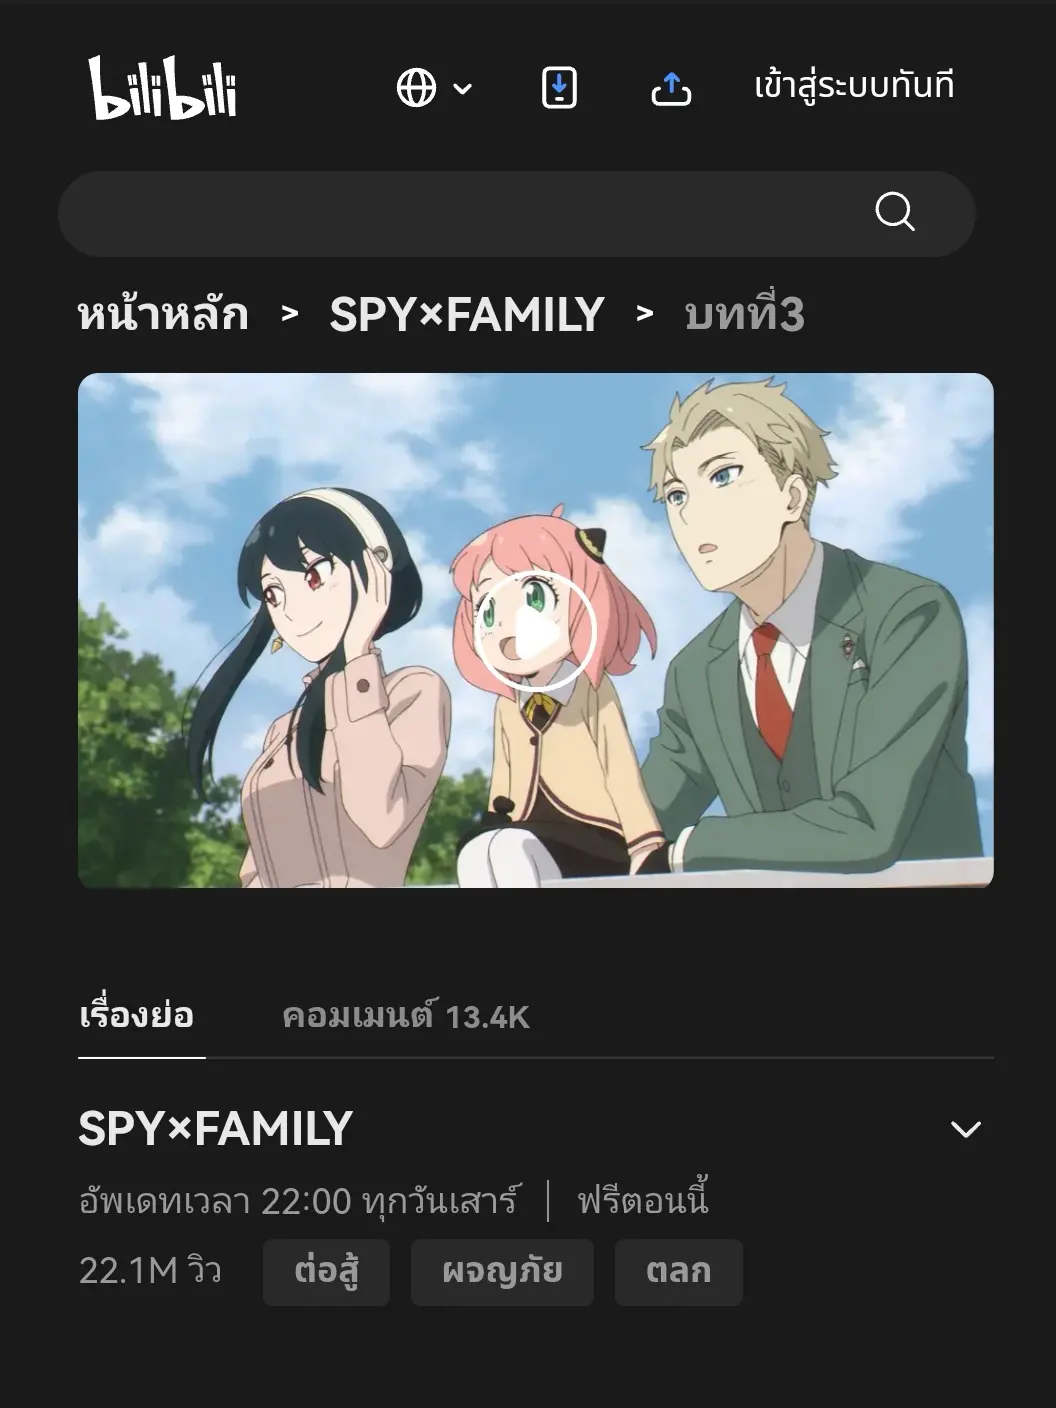 Spy x Family Episode 2 - Anime Series Review - DoubleSama